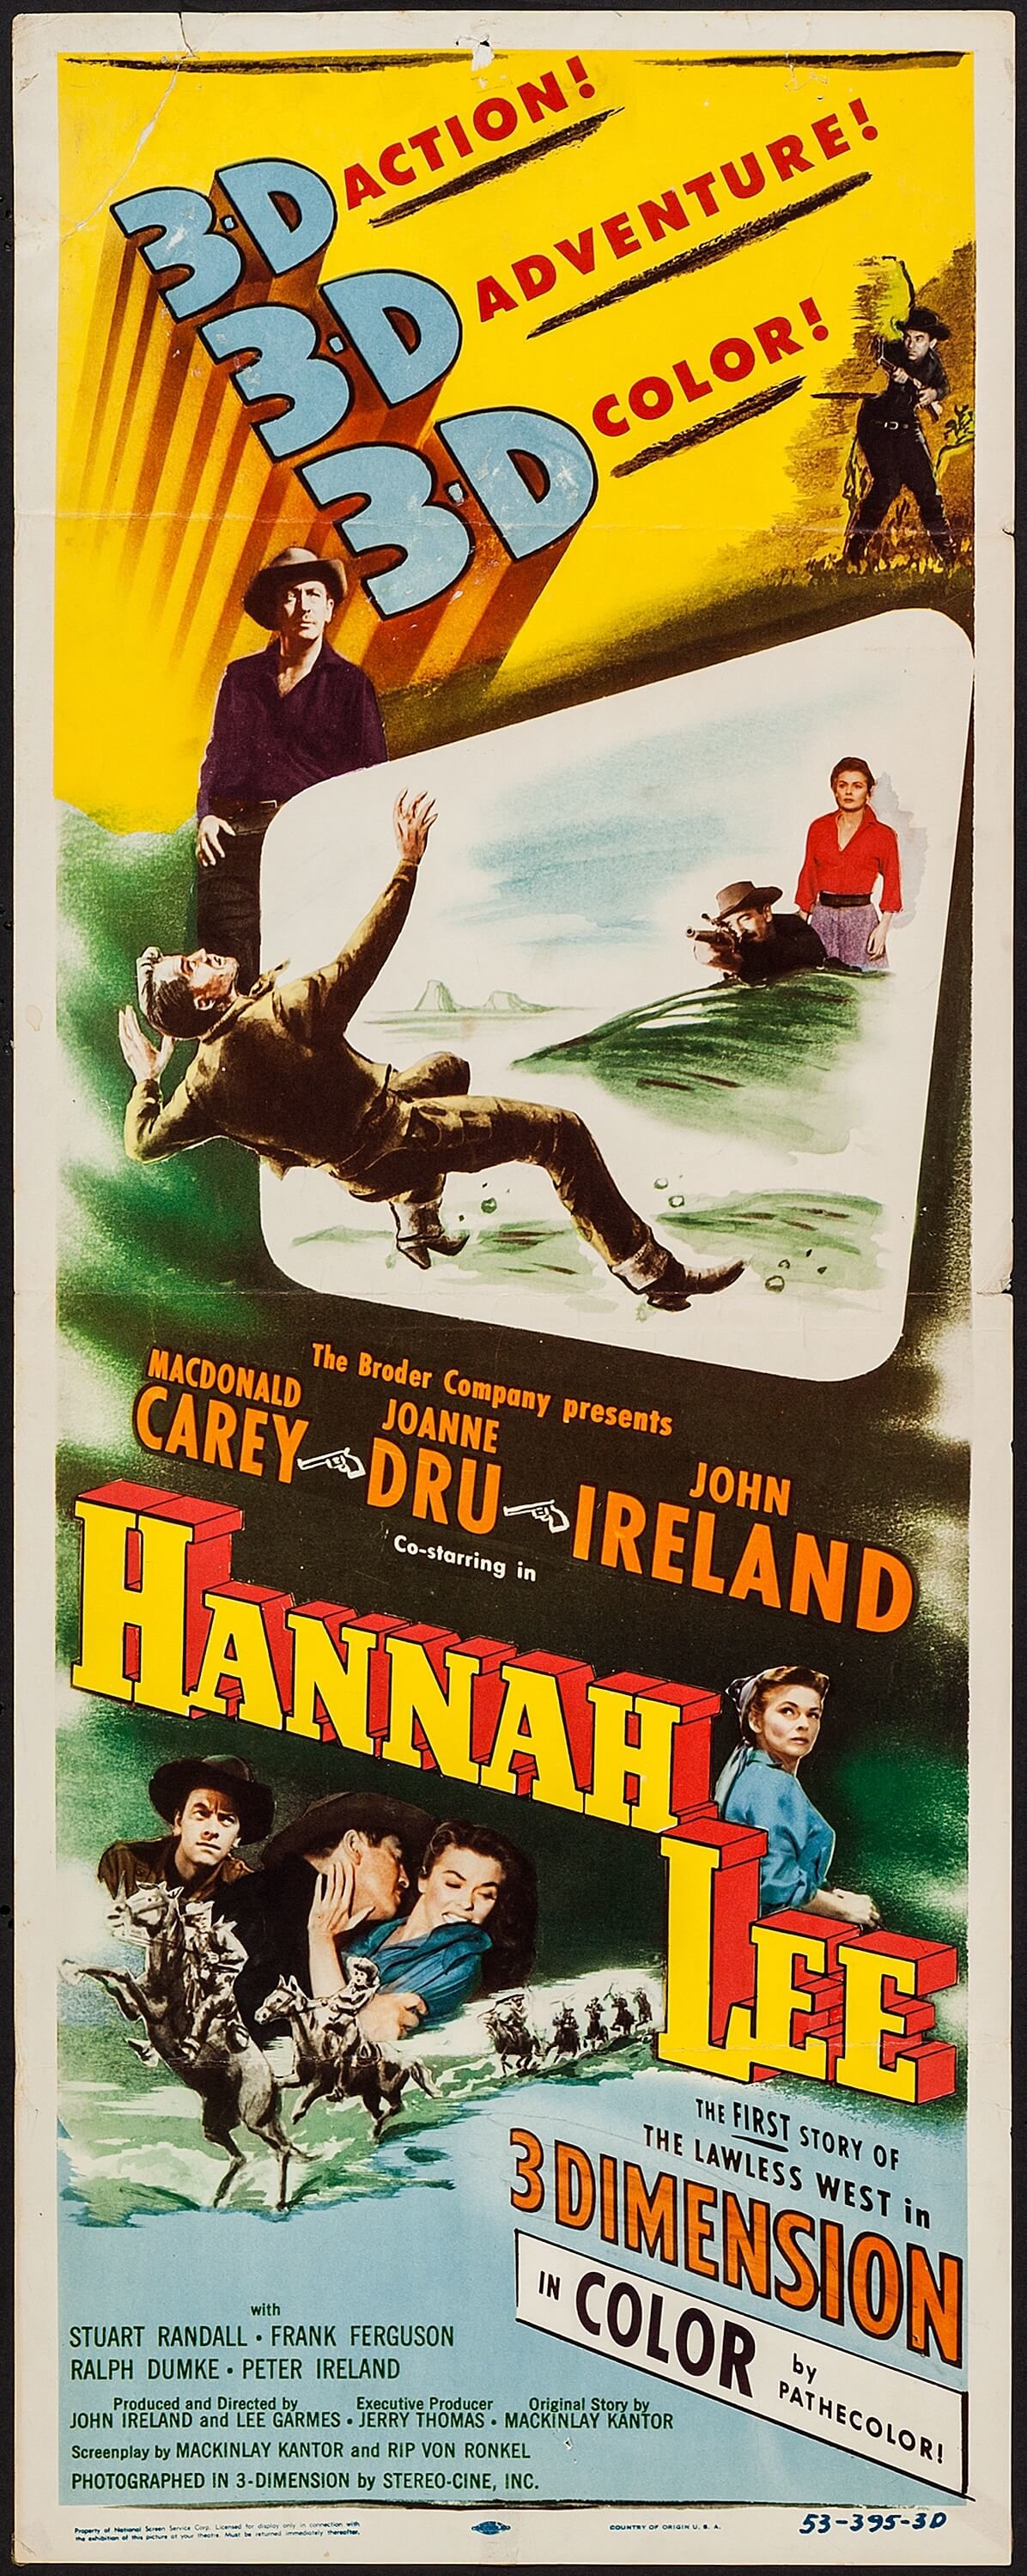 Hannah Lee: An American Primitive (1953) Screenshot 5 